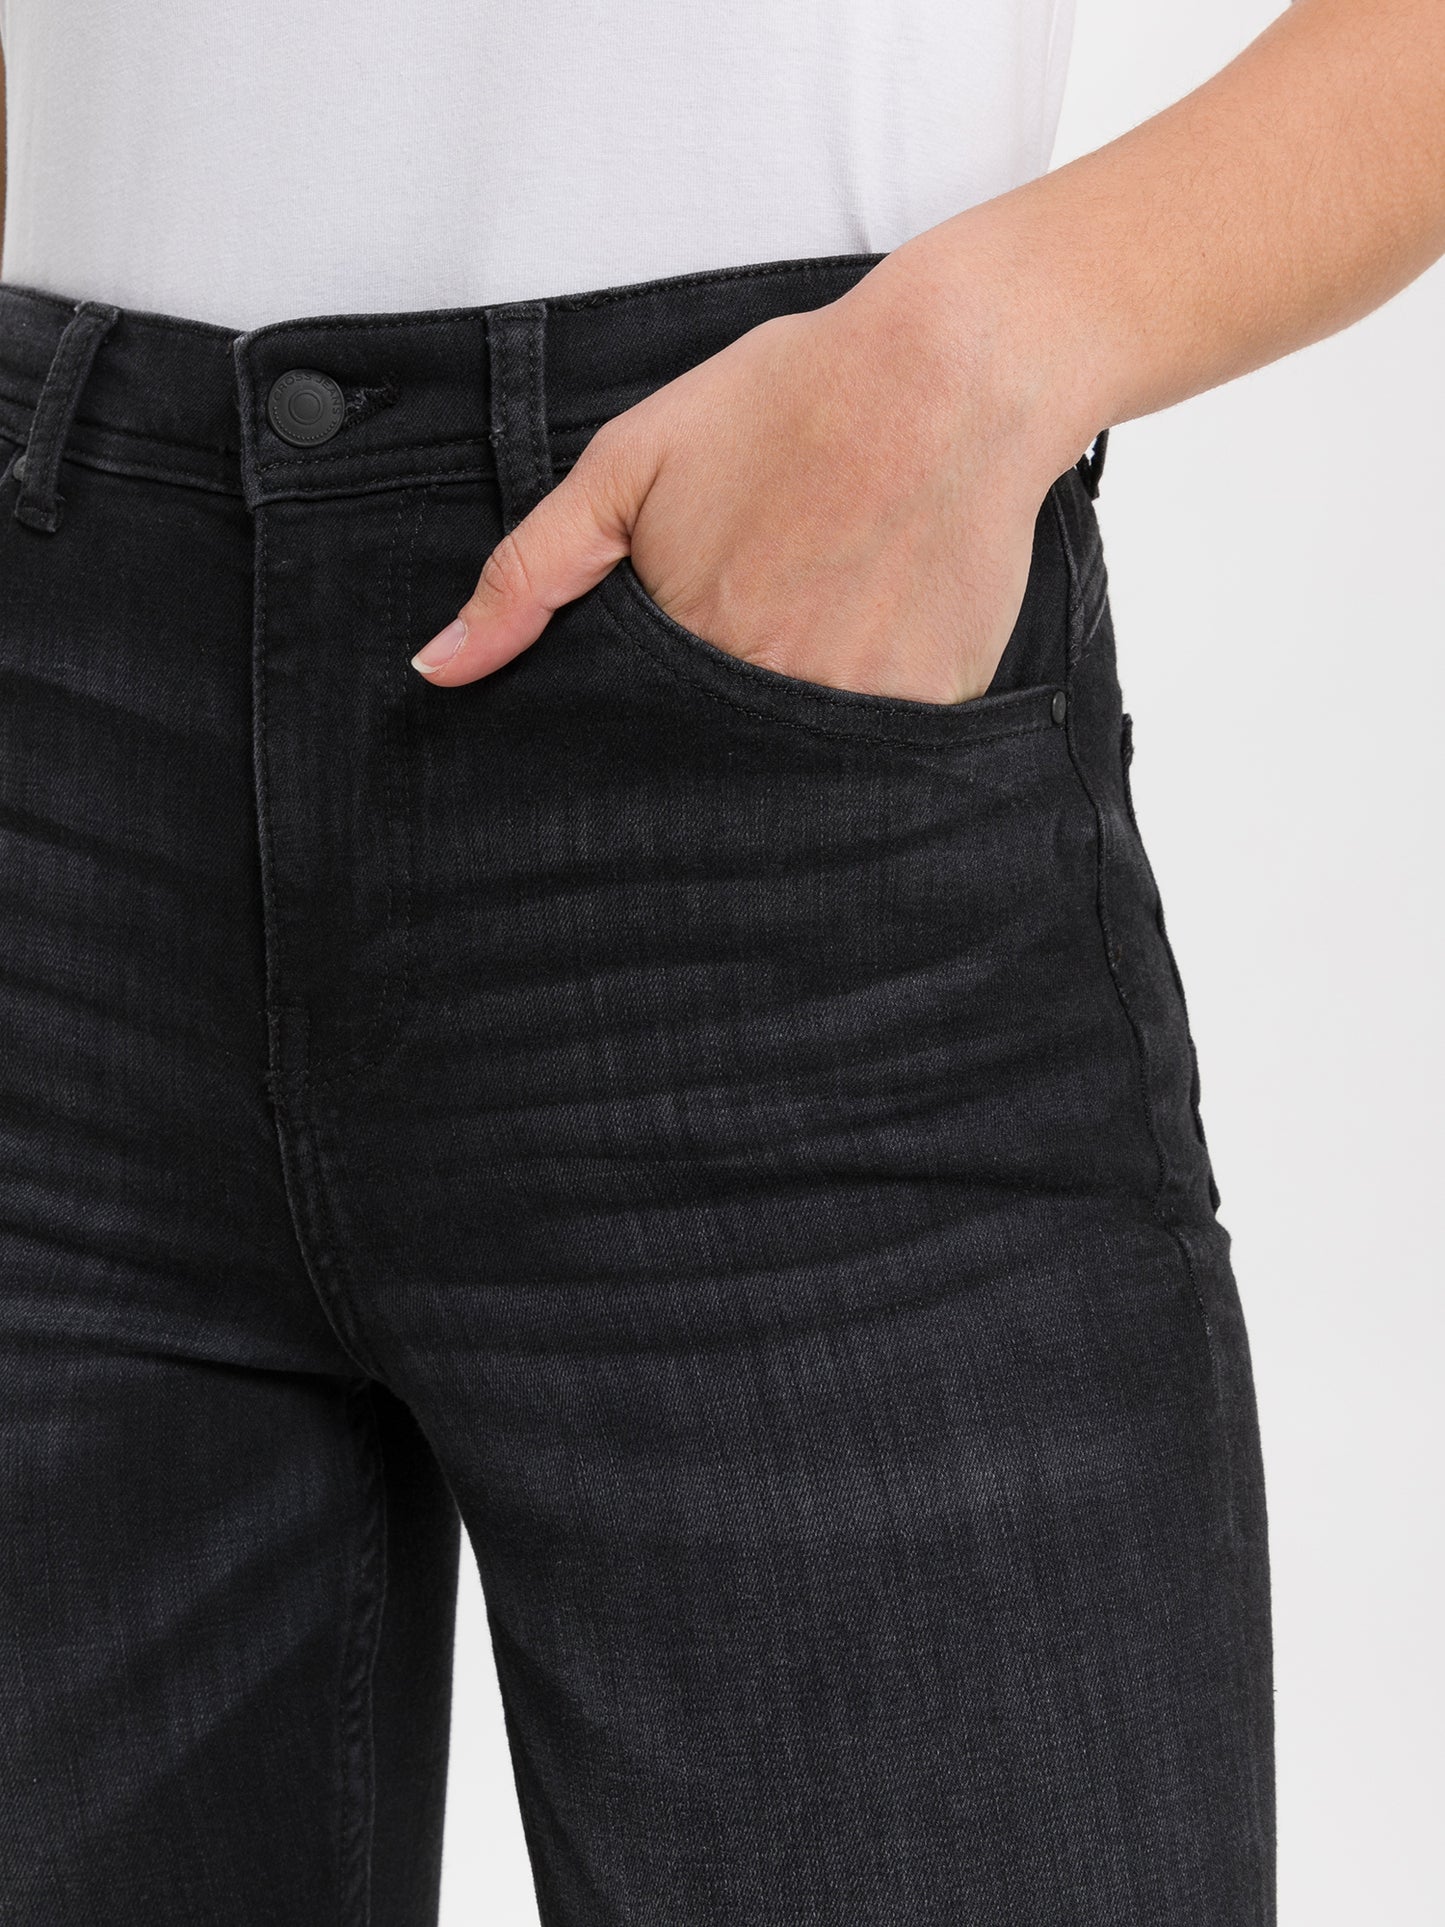 Judy women's jeans super skinny fit high waist ankle length dark grey